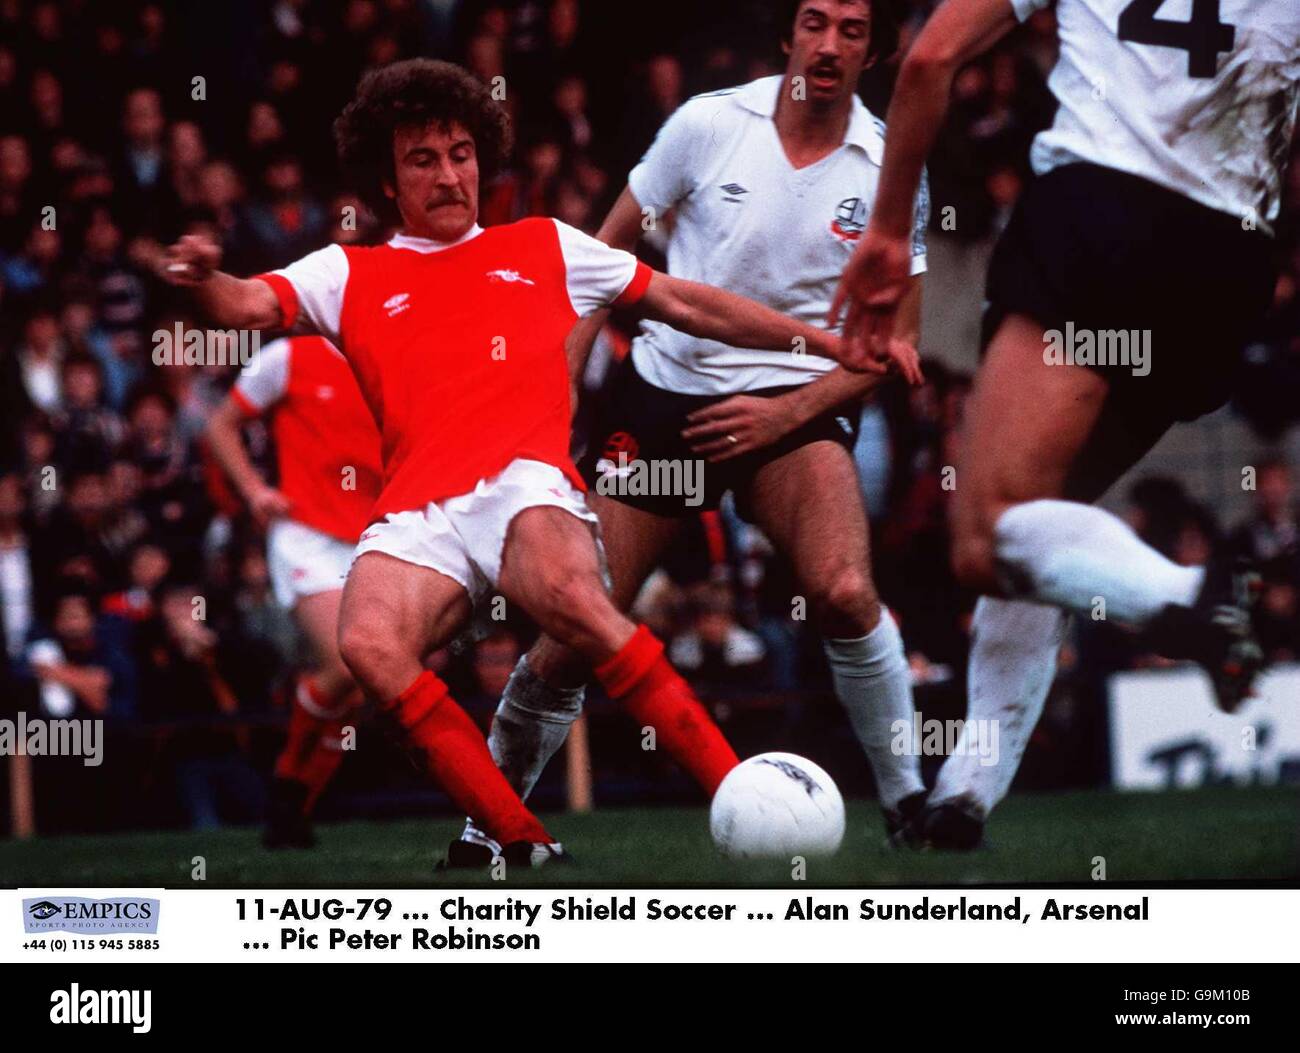 11-AUG-79, Charity Shield Soccer, Alan Sunderland, Arsenal Stock Photo